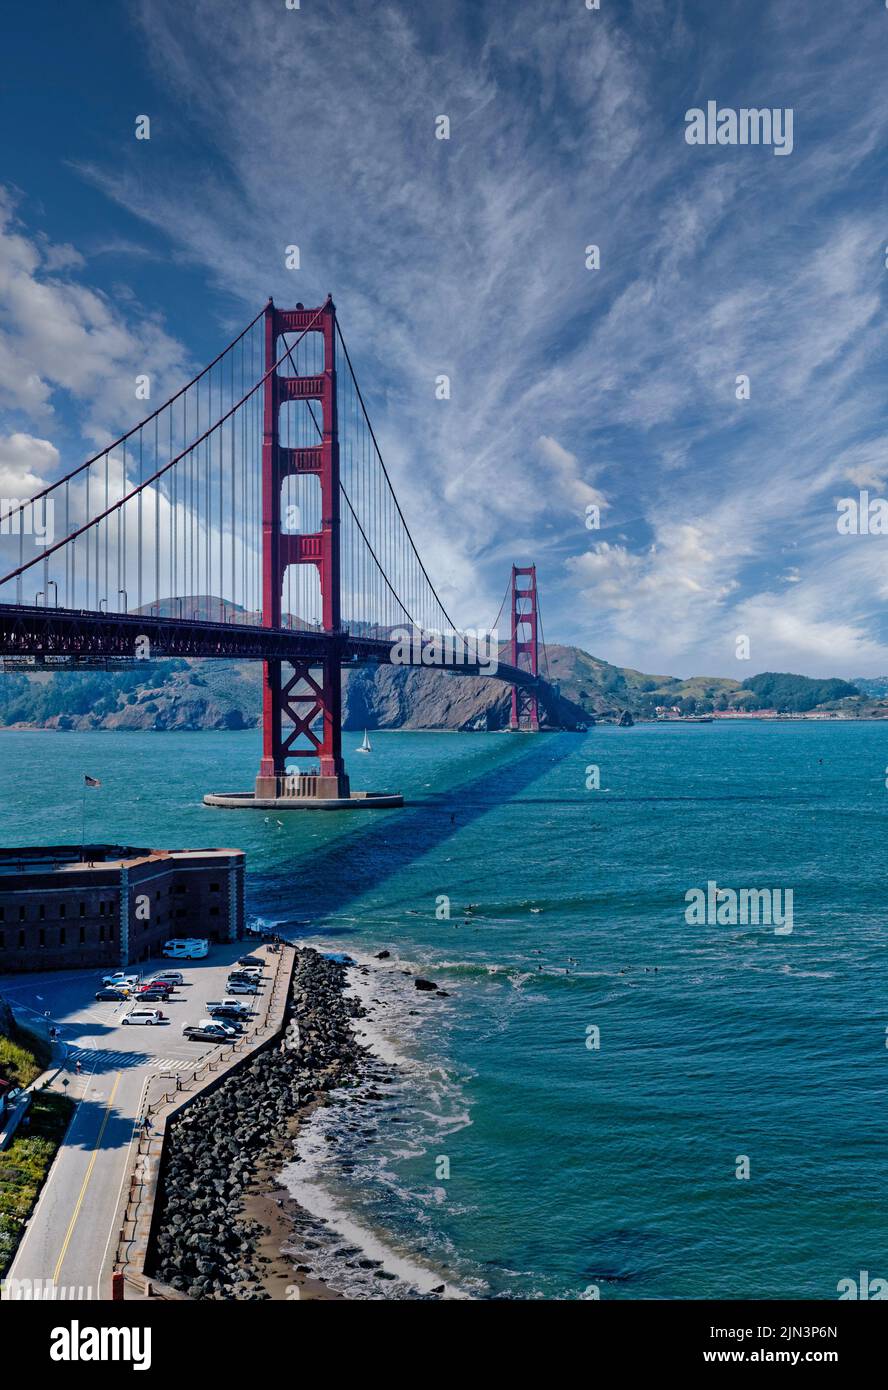 View of the Golden Gate Bridge in San Francisco Stock Photo